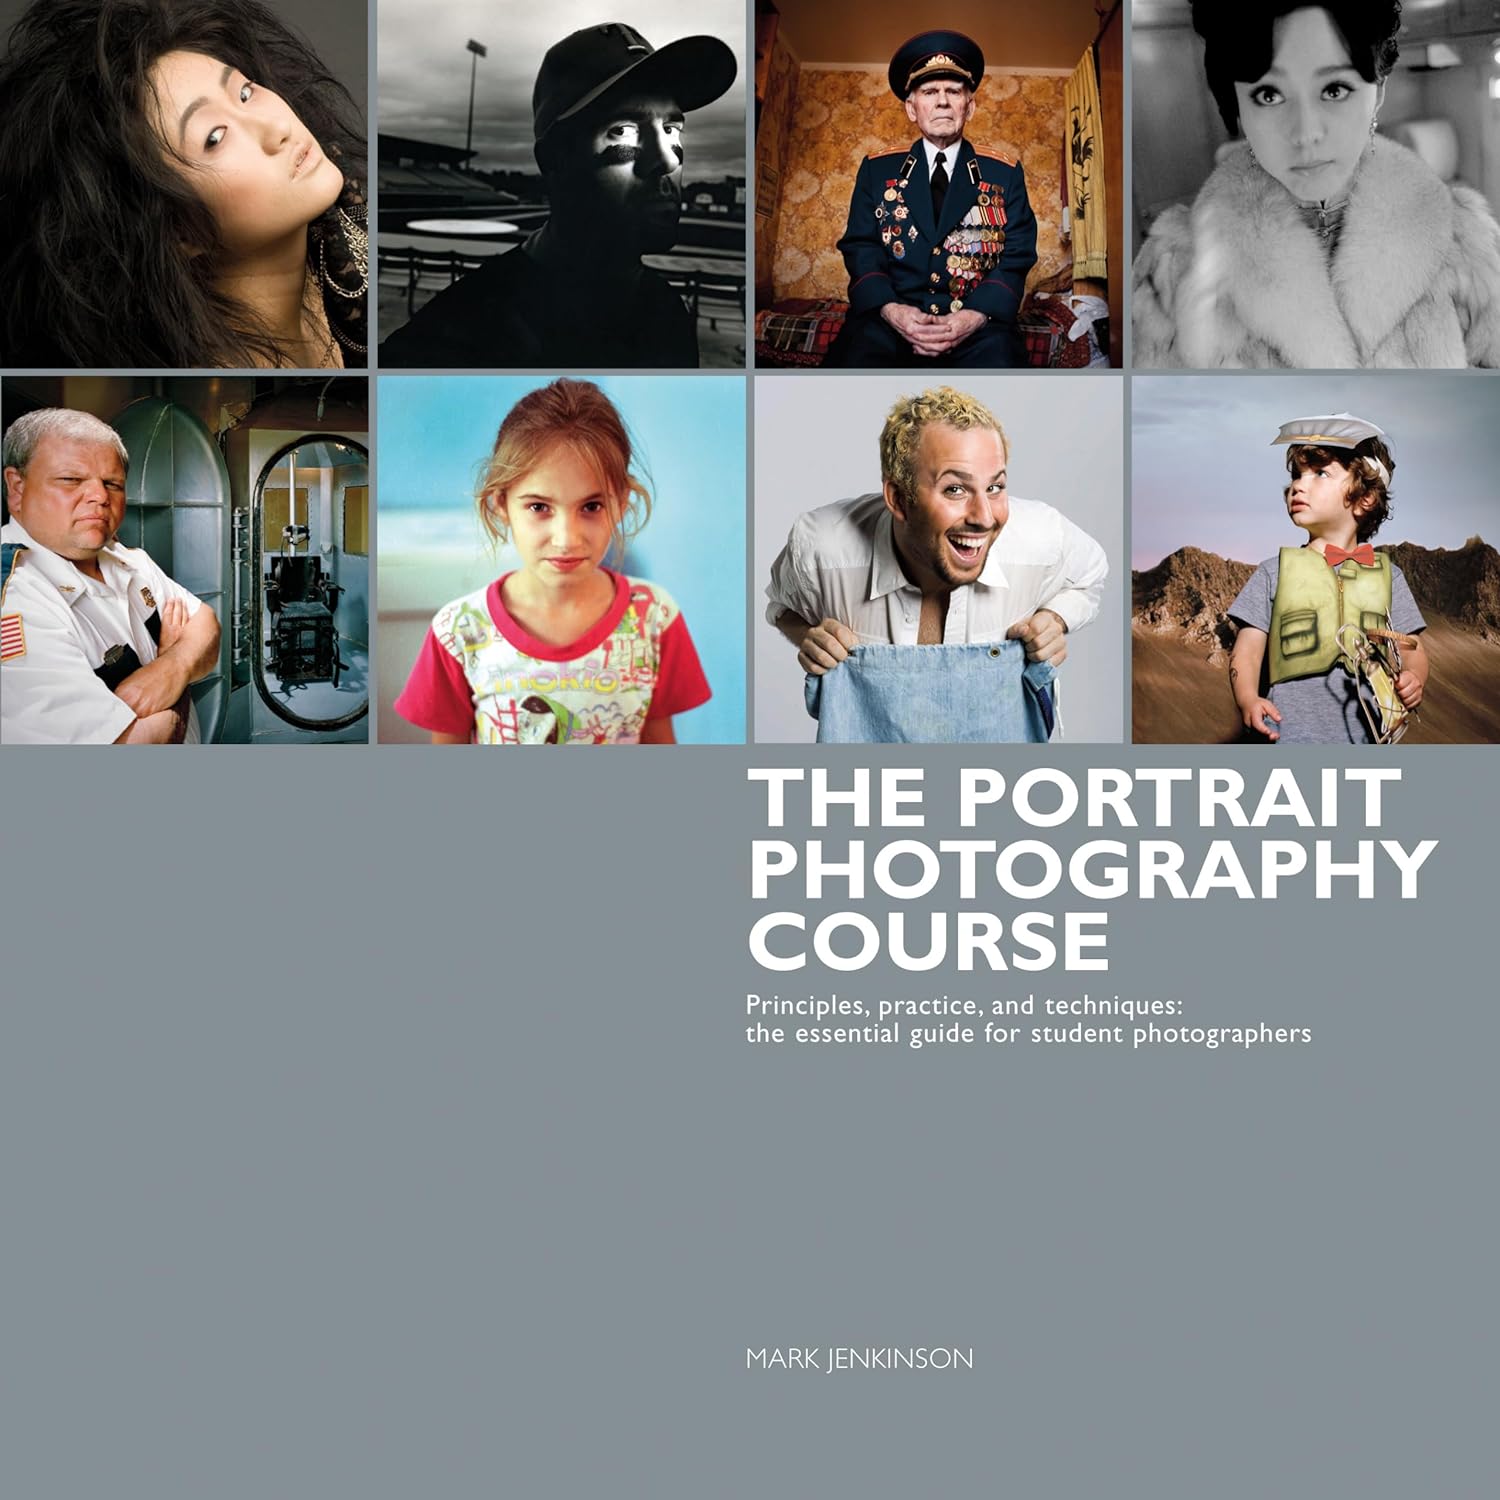 Portrait Photography Course by Mark Jenkinson